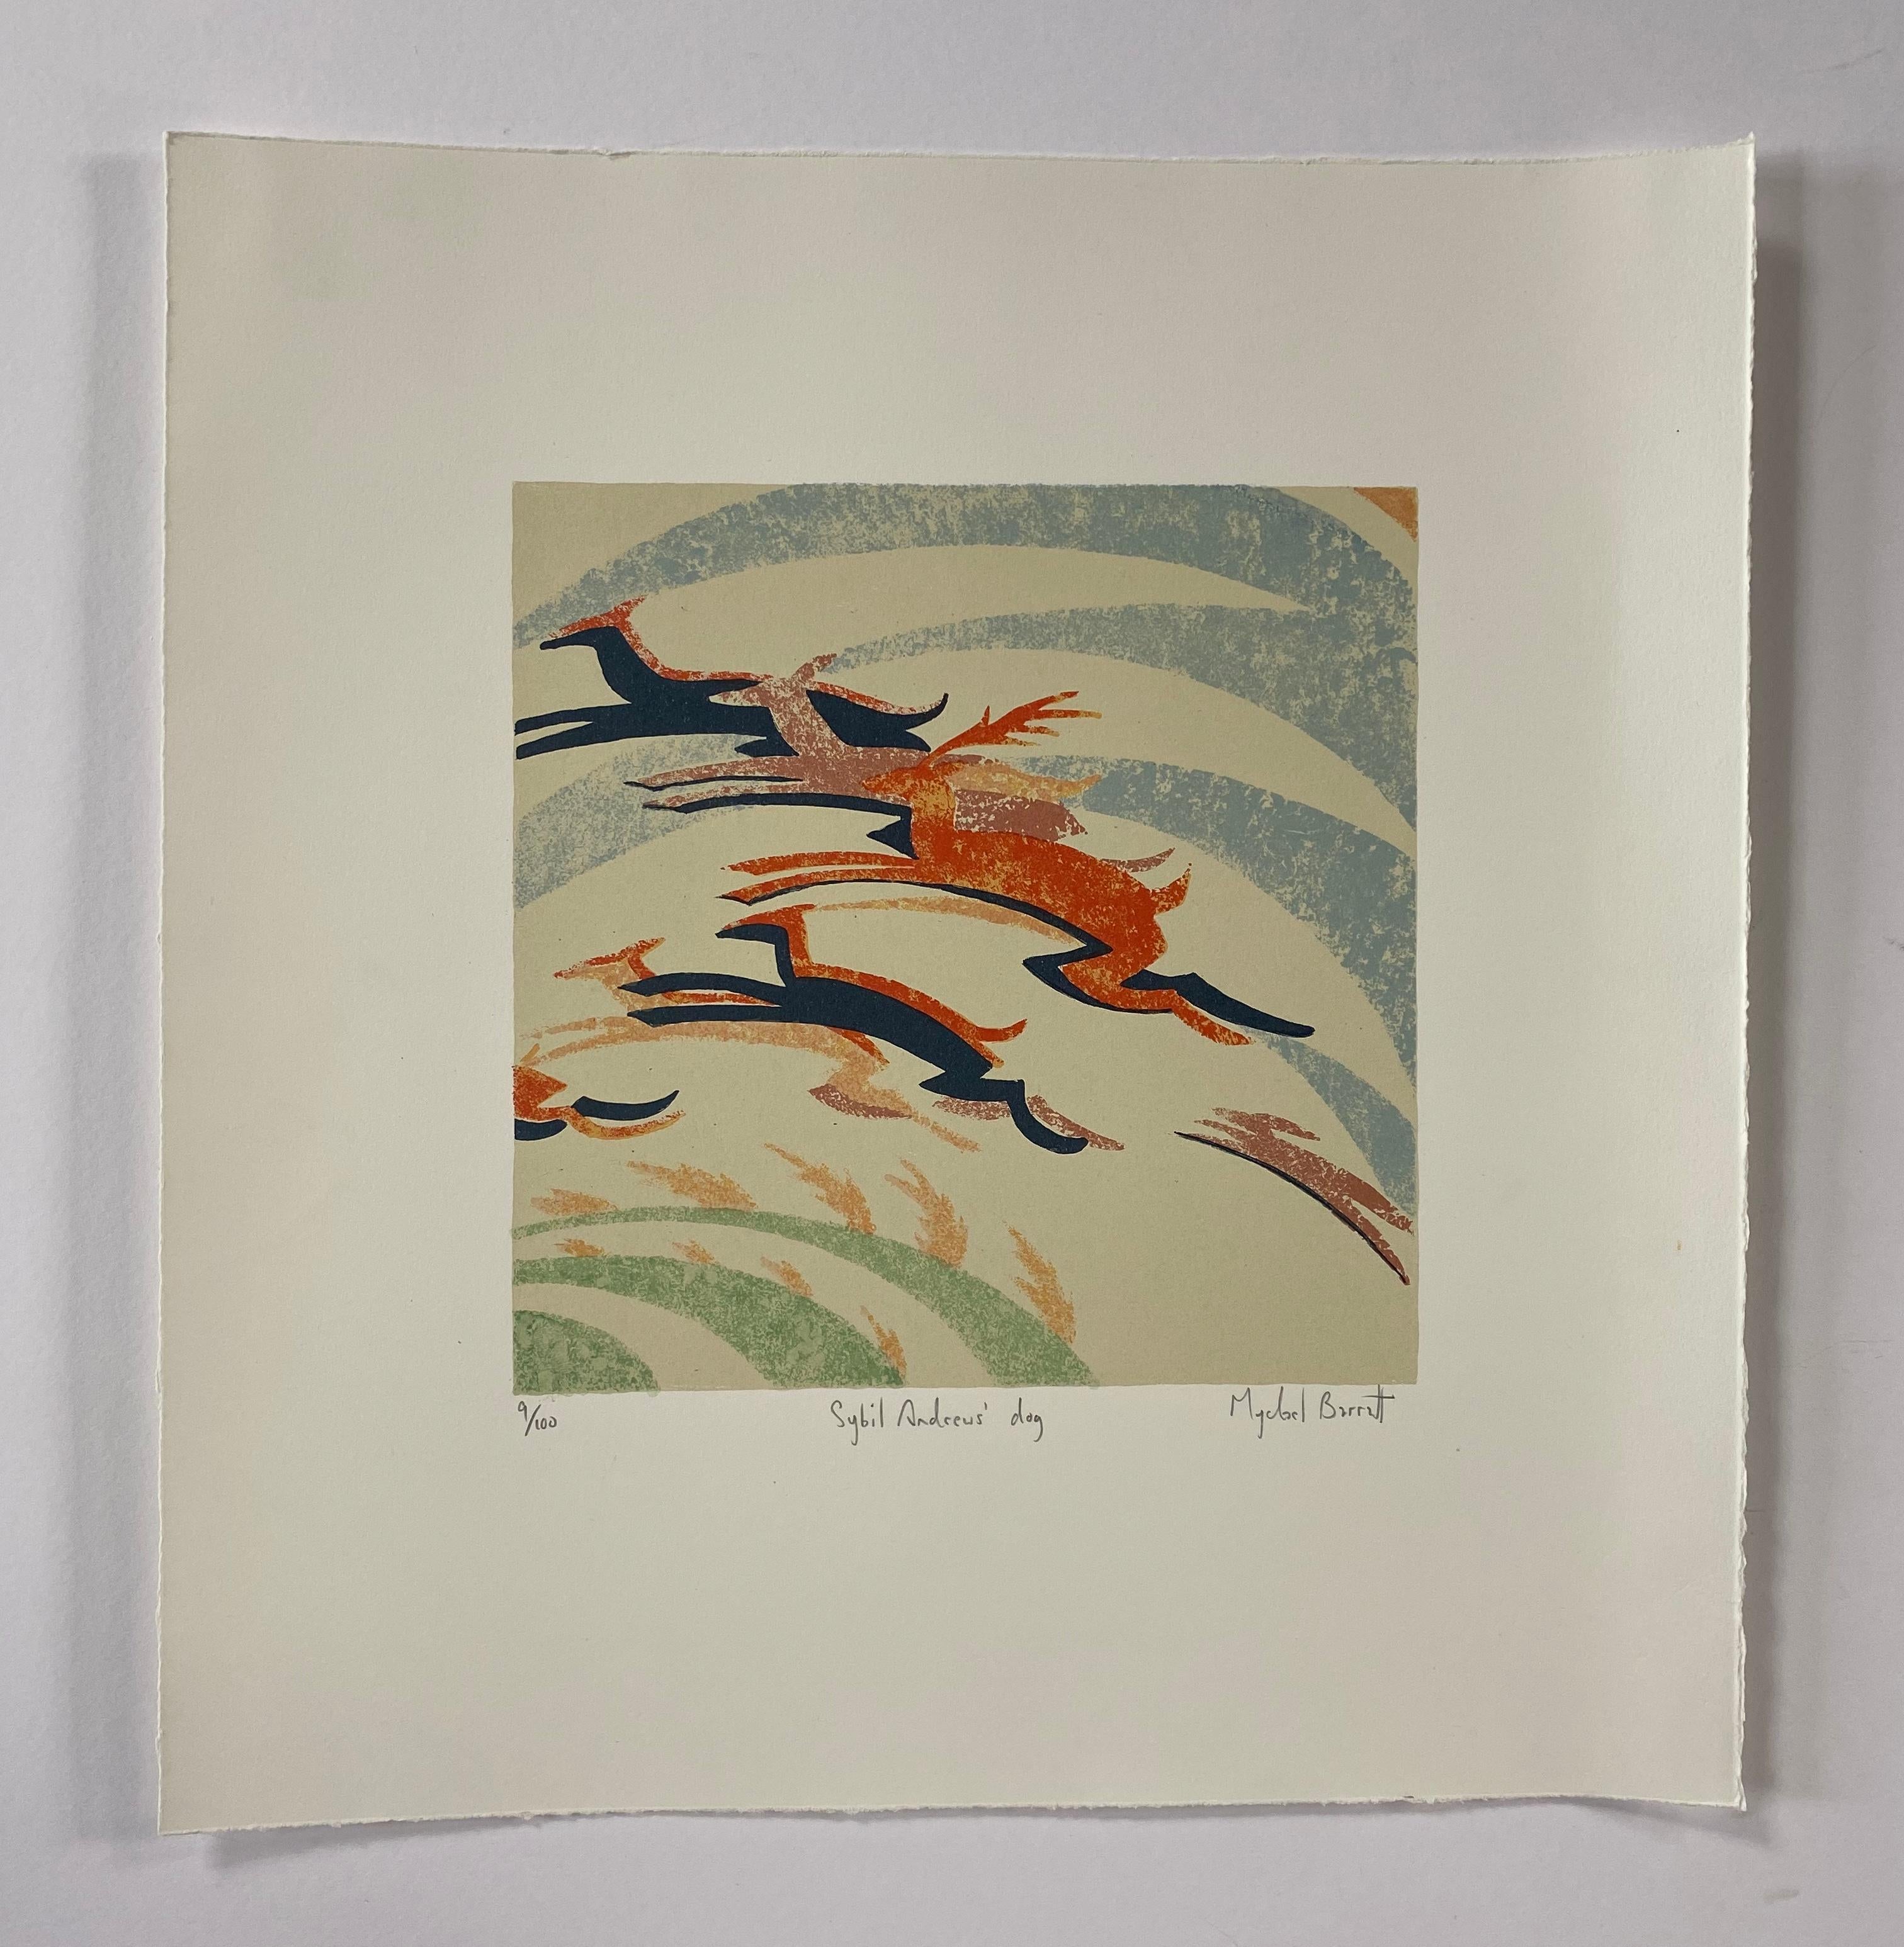 Mychael Barratt, Sybil Andrews’ Dog, Limited Edition Print, Contemporary Art